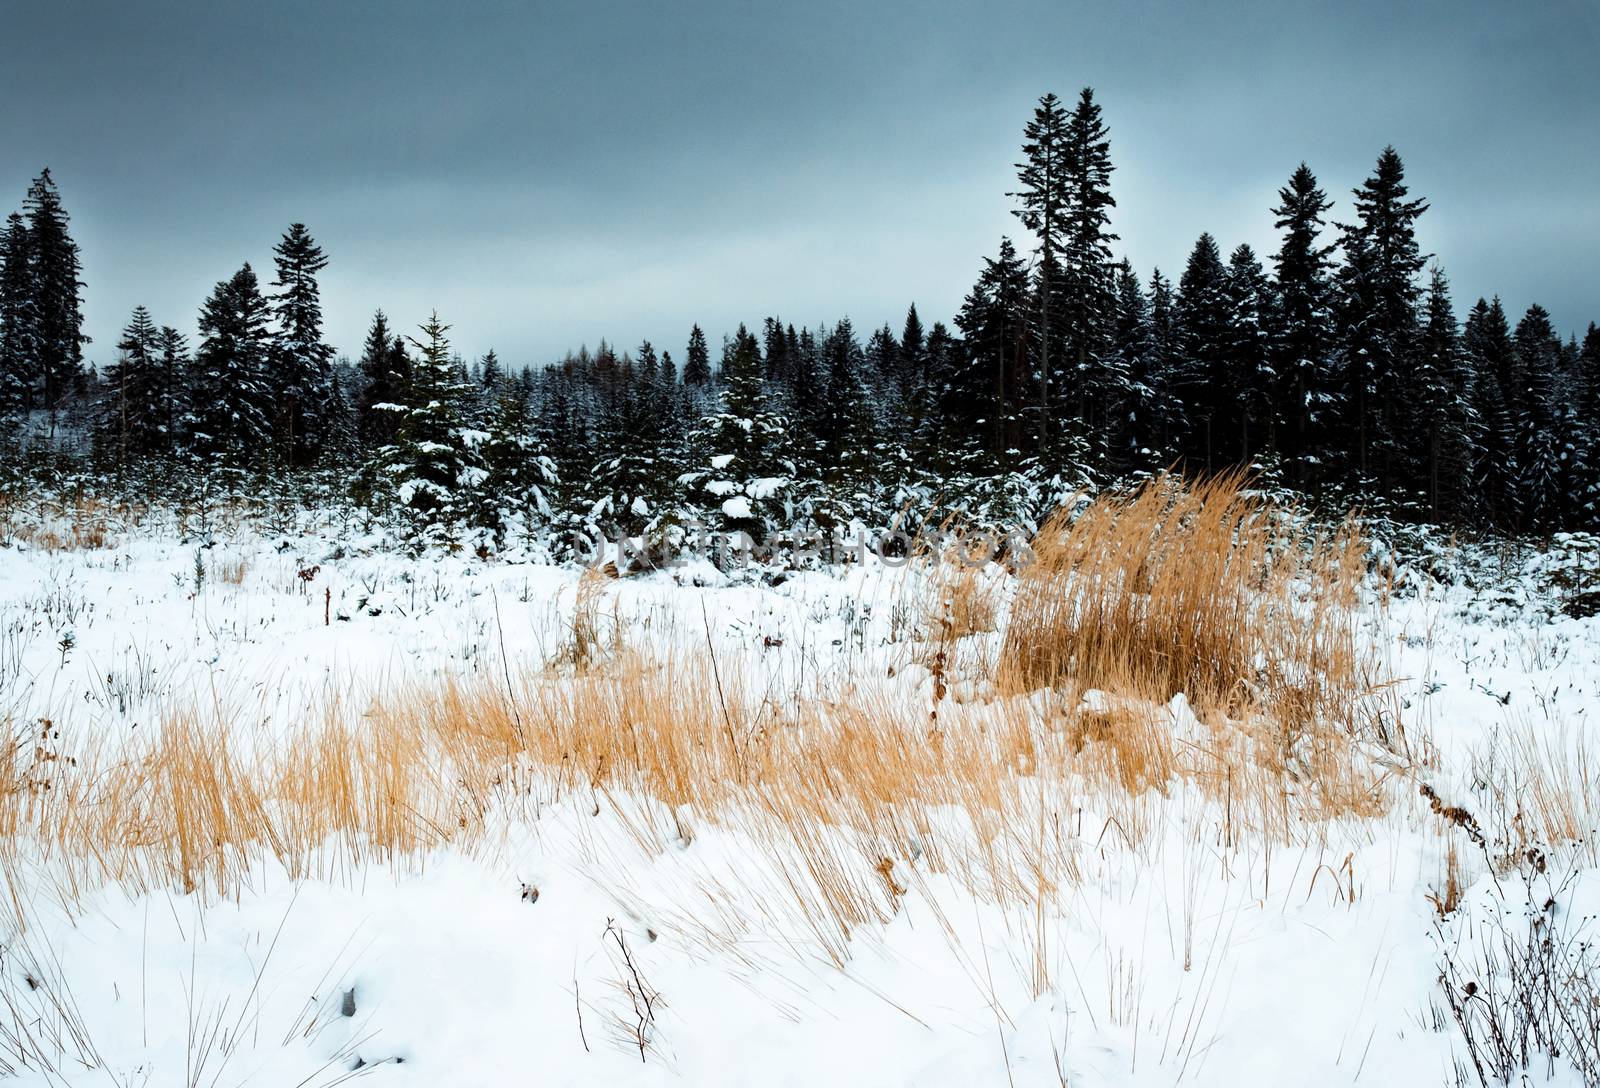 seasonal nature background dark winter landscape with dry grass